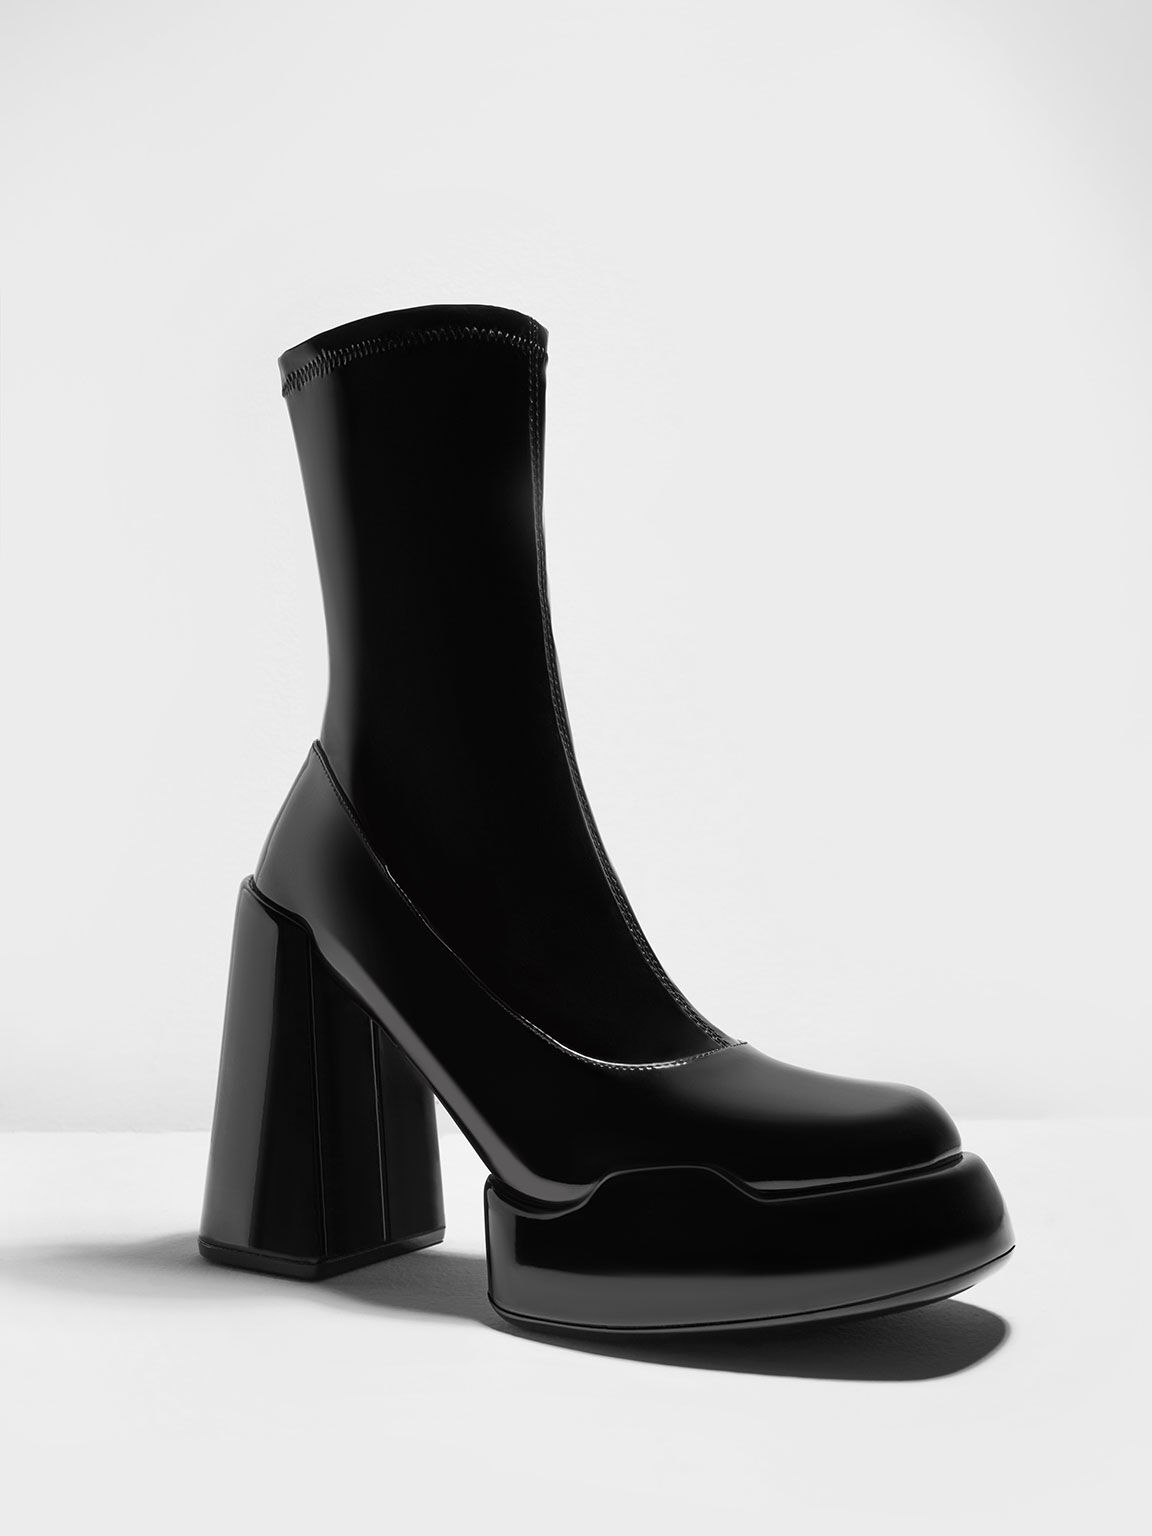 Nude Pointed Toe Slingback Heels | CHARLES & KEITH US | Shoes heels classy,  Wedding shoes heels, Womens fashion shoes